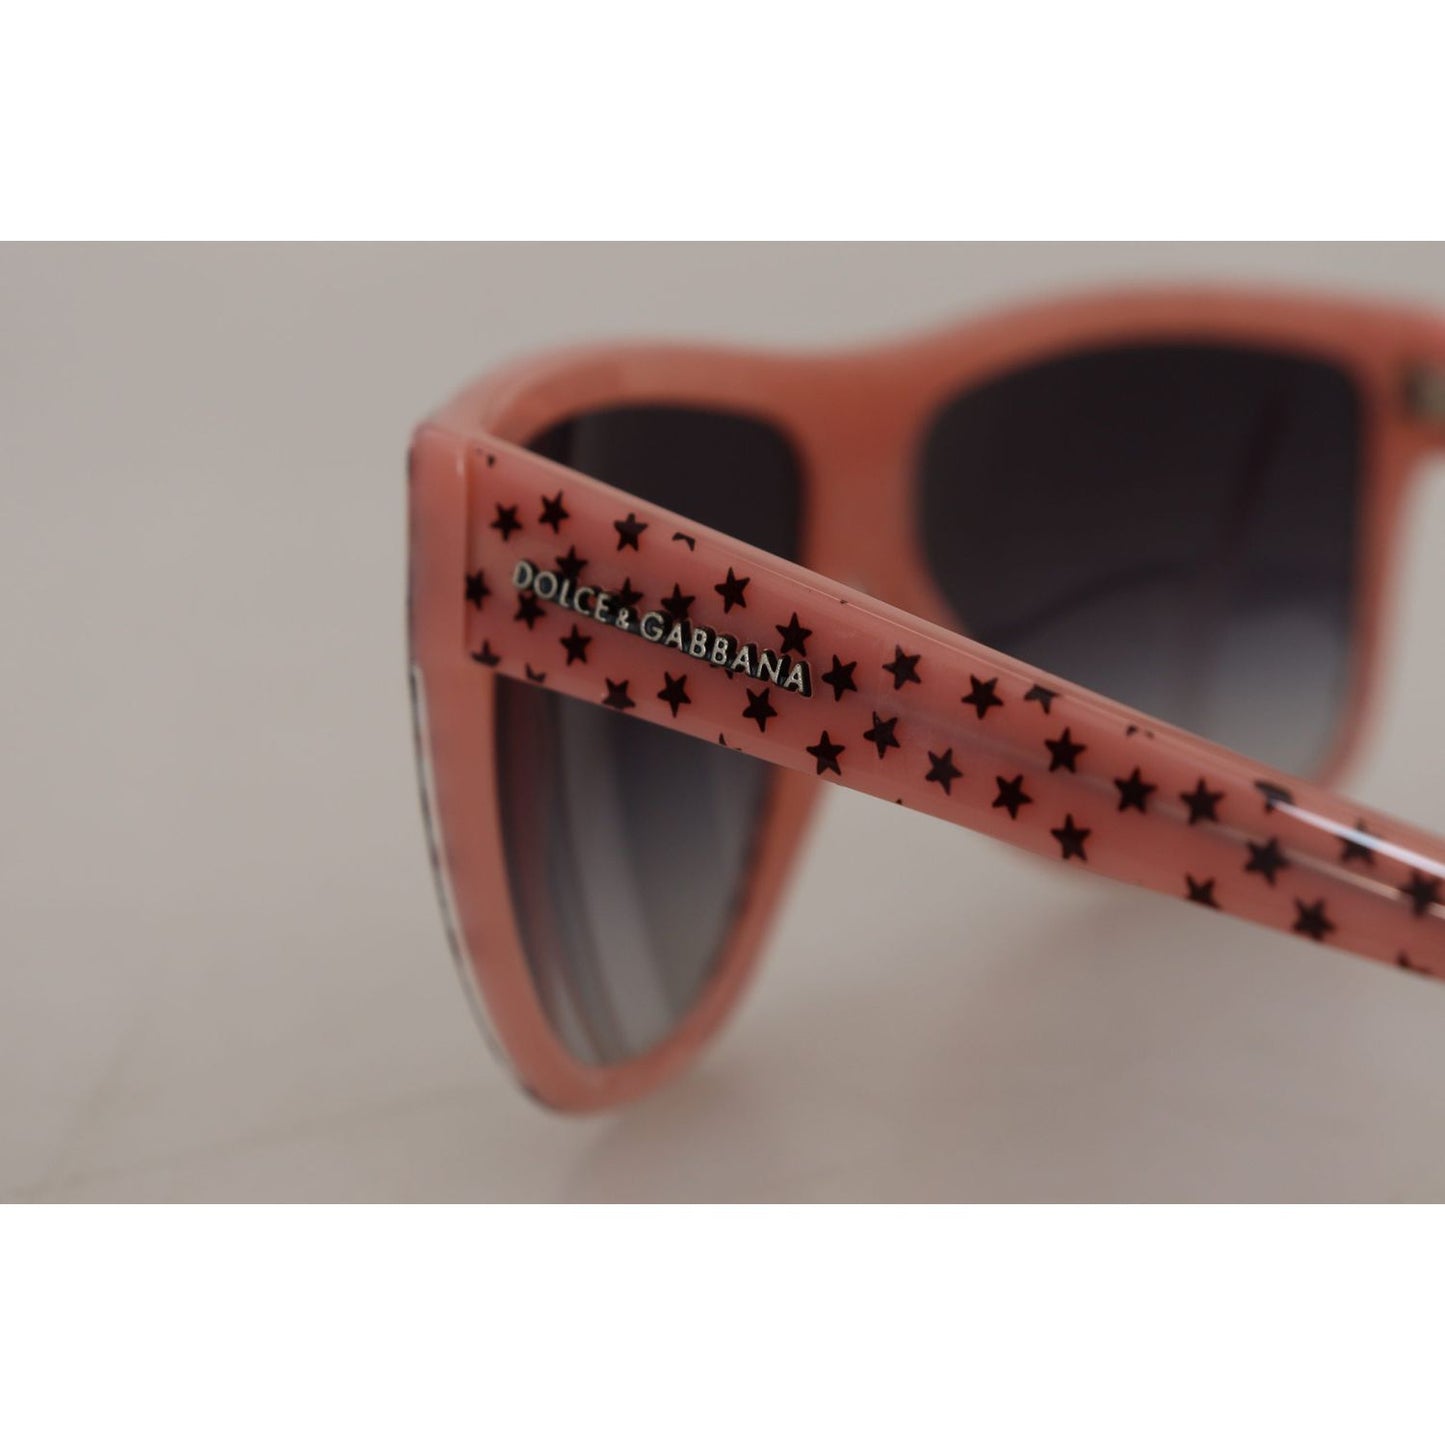 Dolce & Gabbana Elegant Pink Gradient Sunglasses for Women pink-acetate-frame-stars-embellishment-dg4124-sunglasses-1